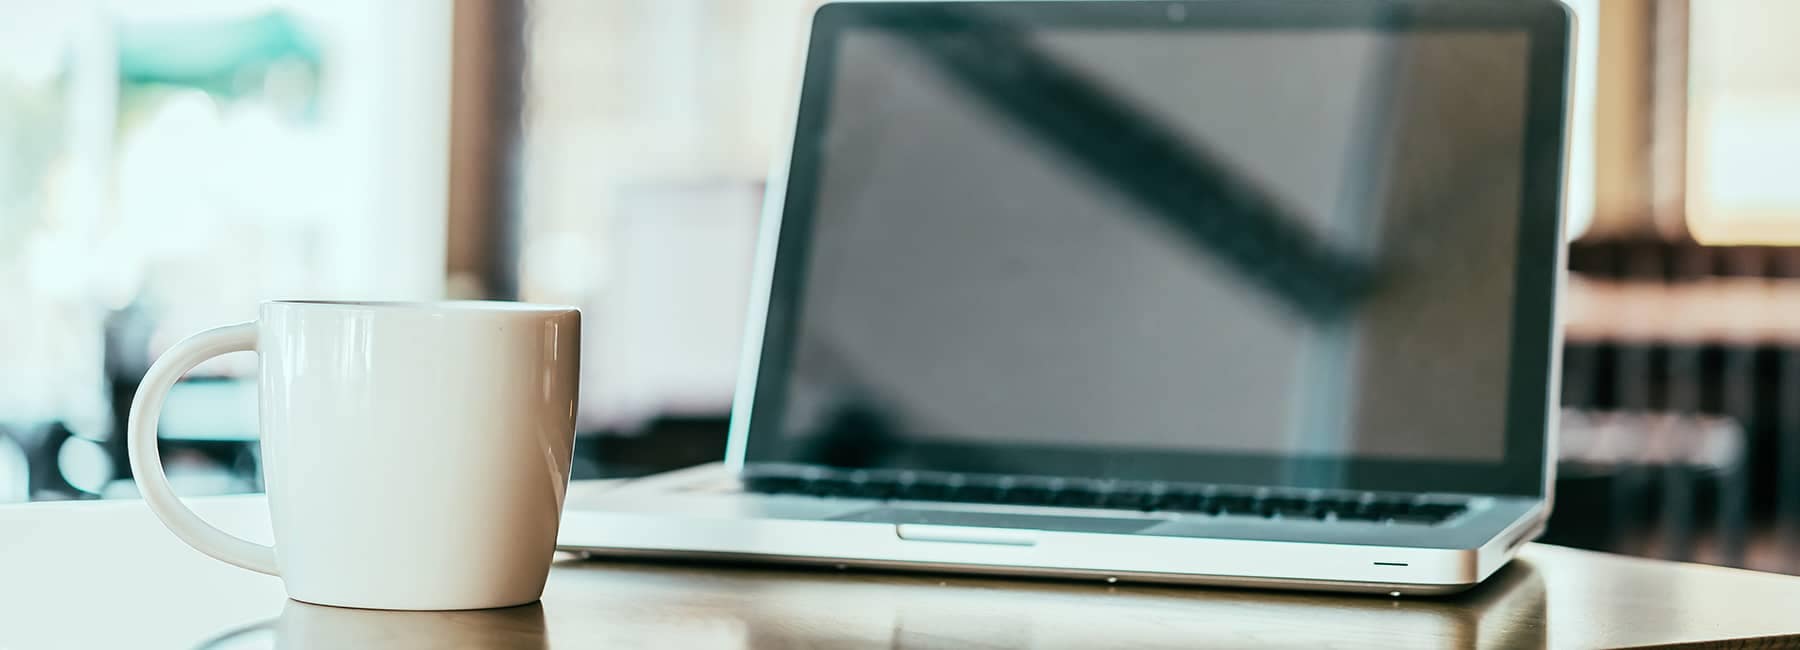 Coffee mug and laptop